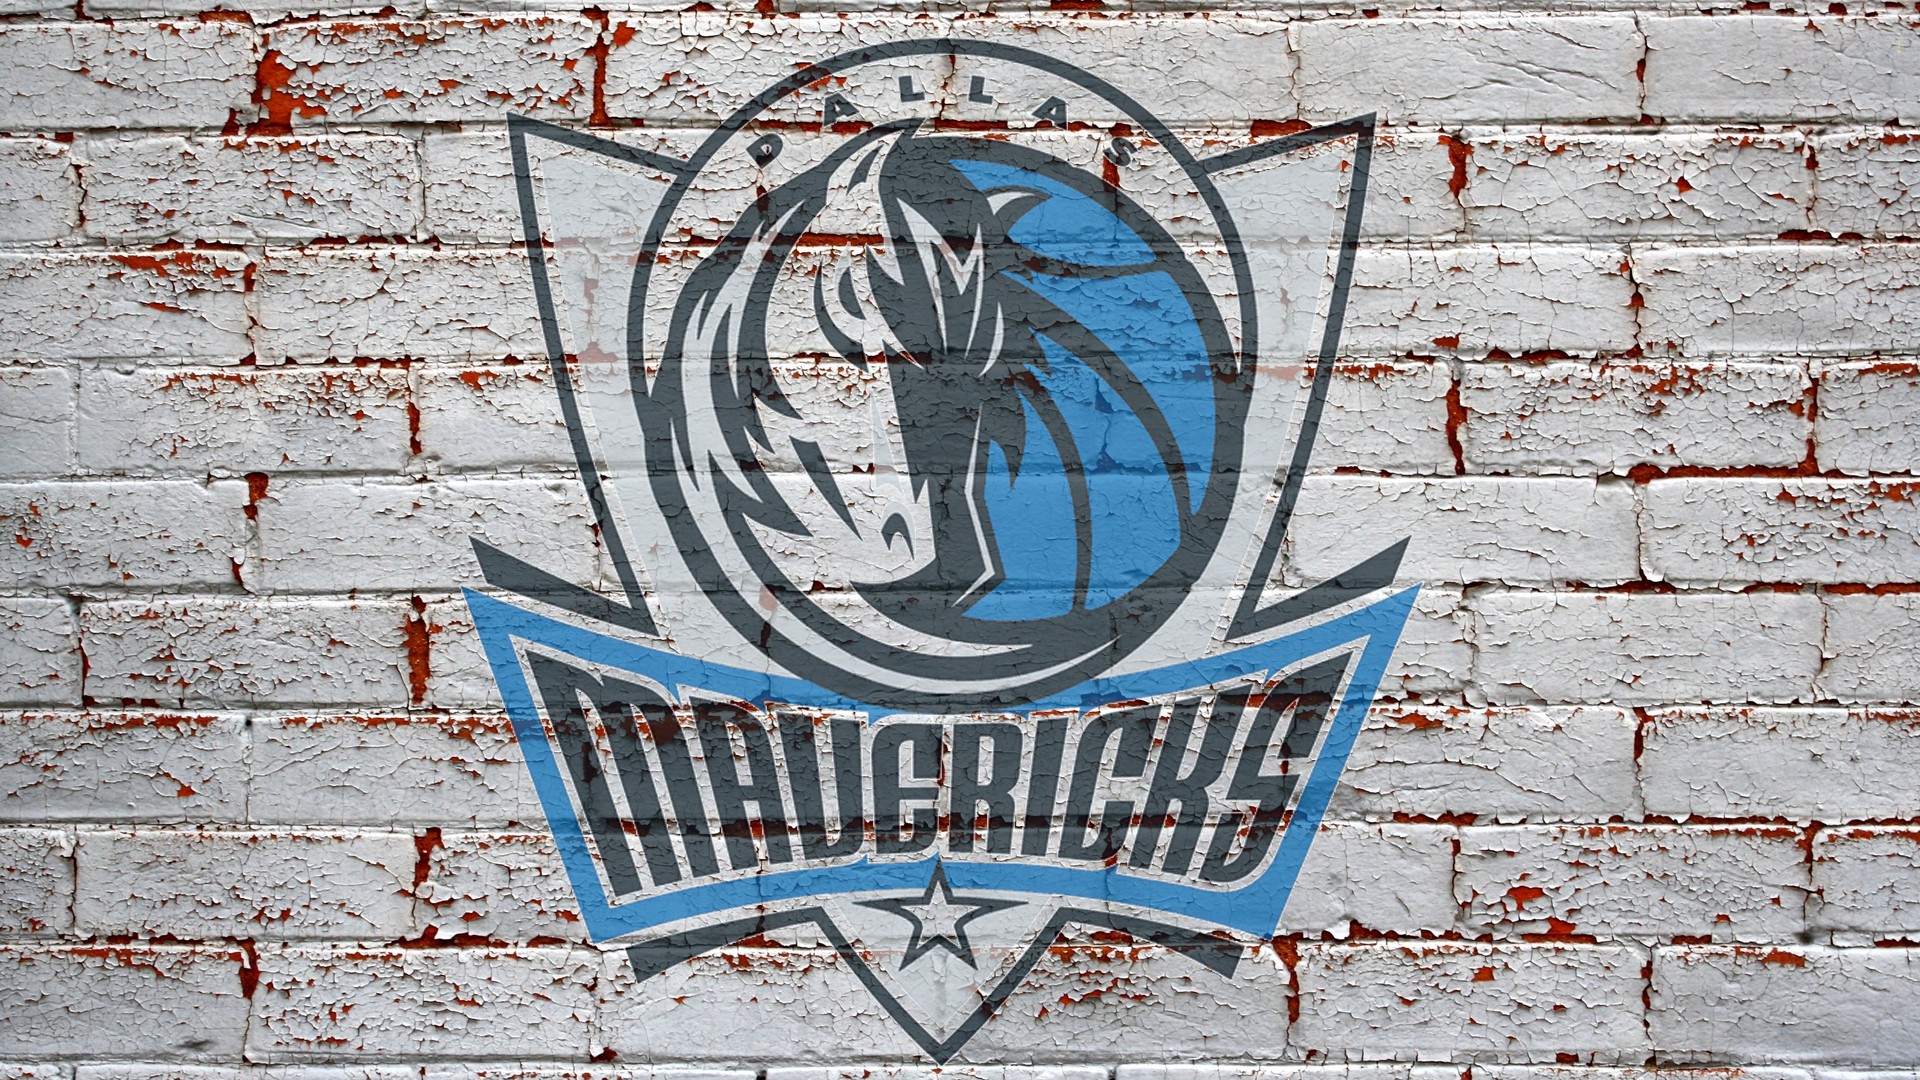 Dallas Mavericks Basketball Nba Wallpaper Background